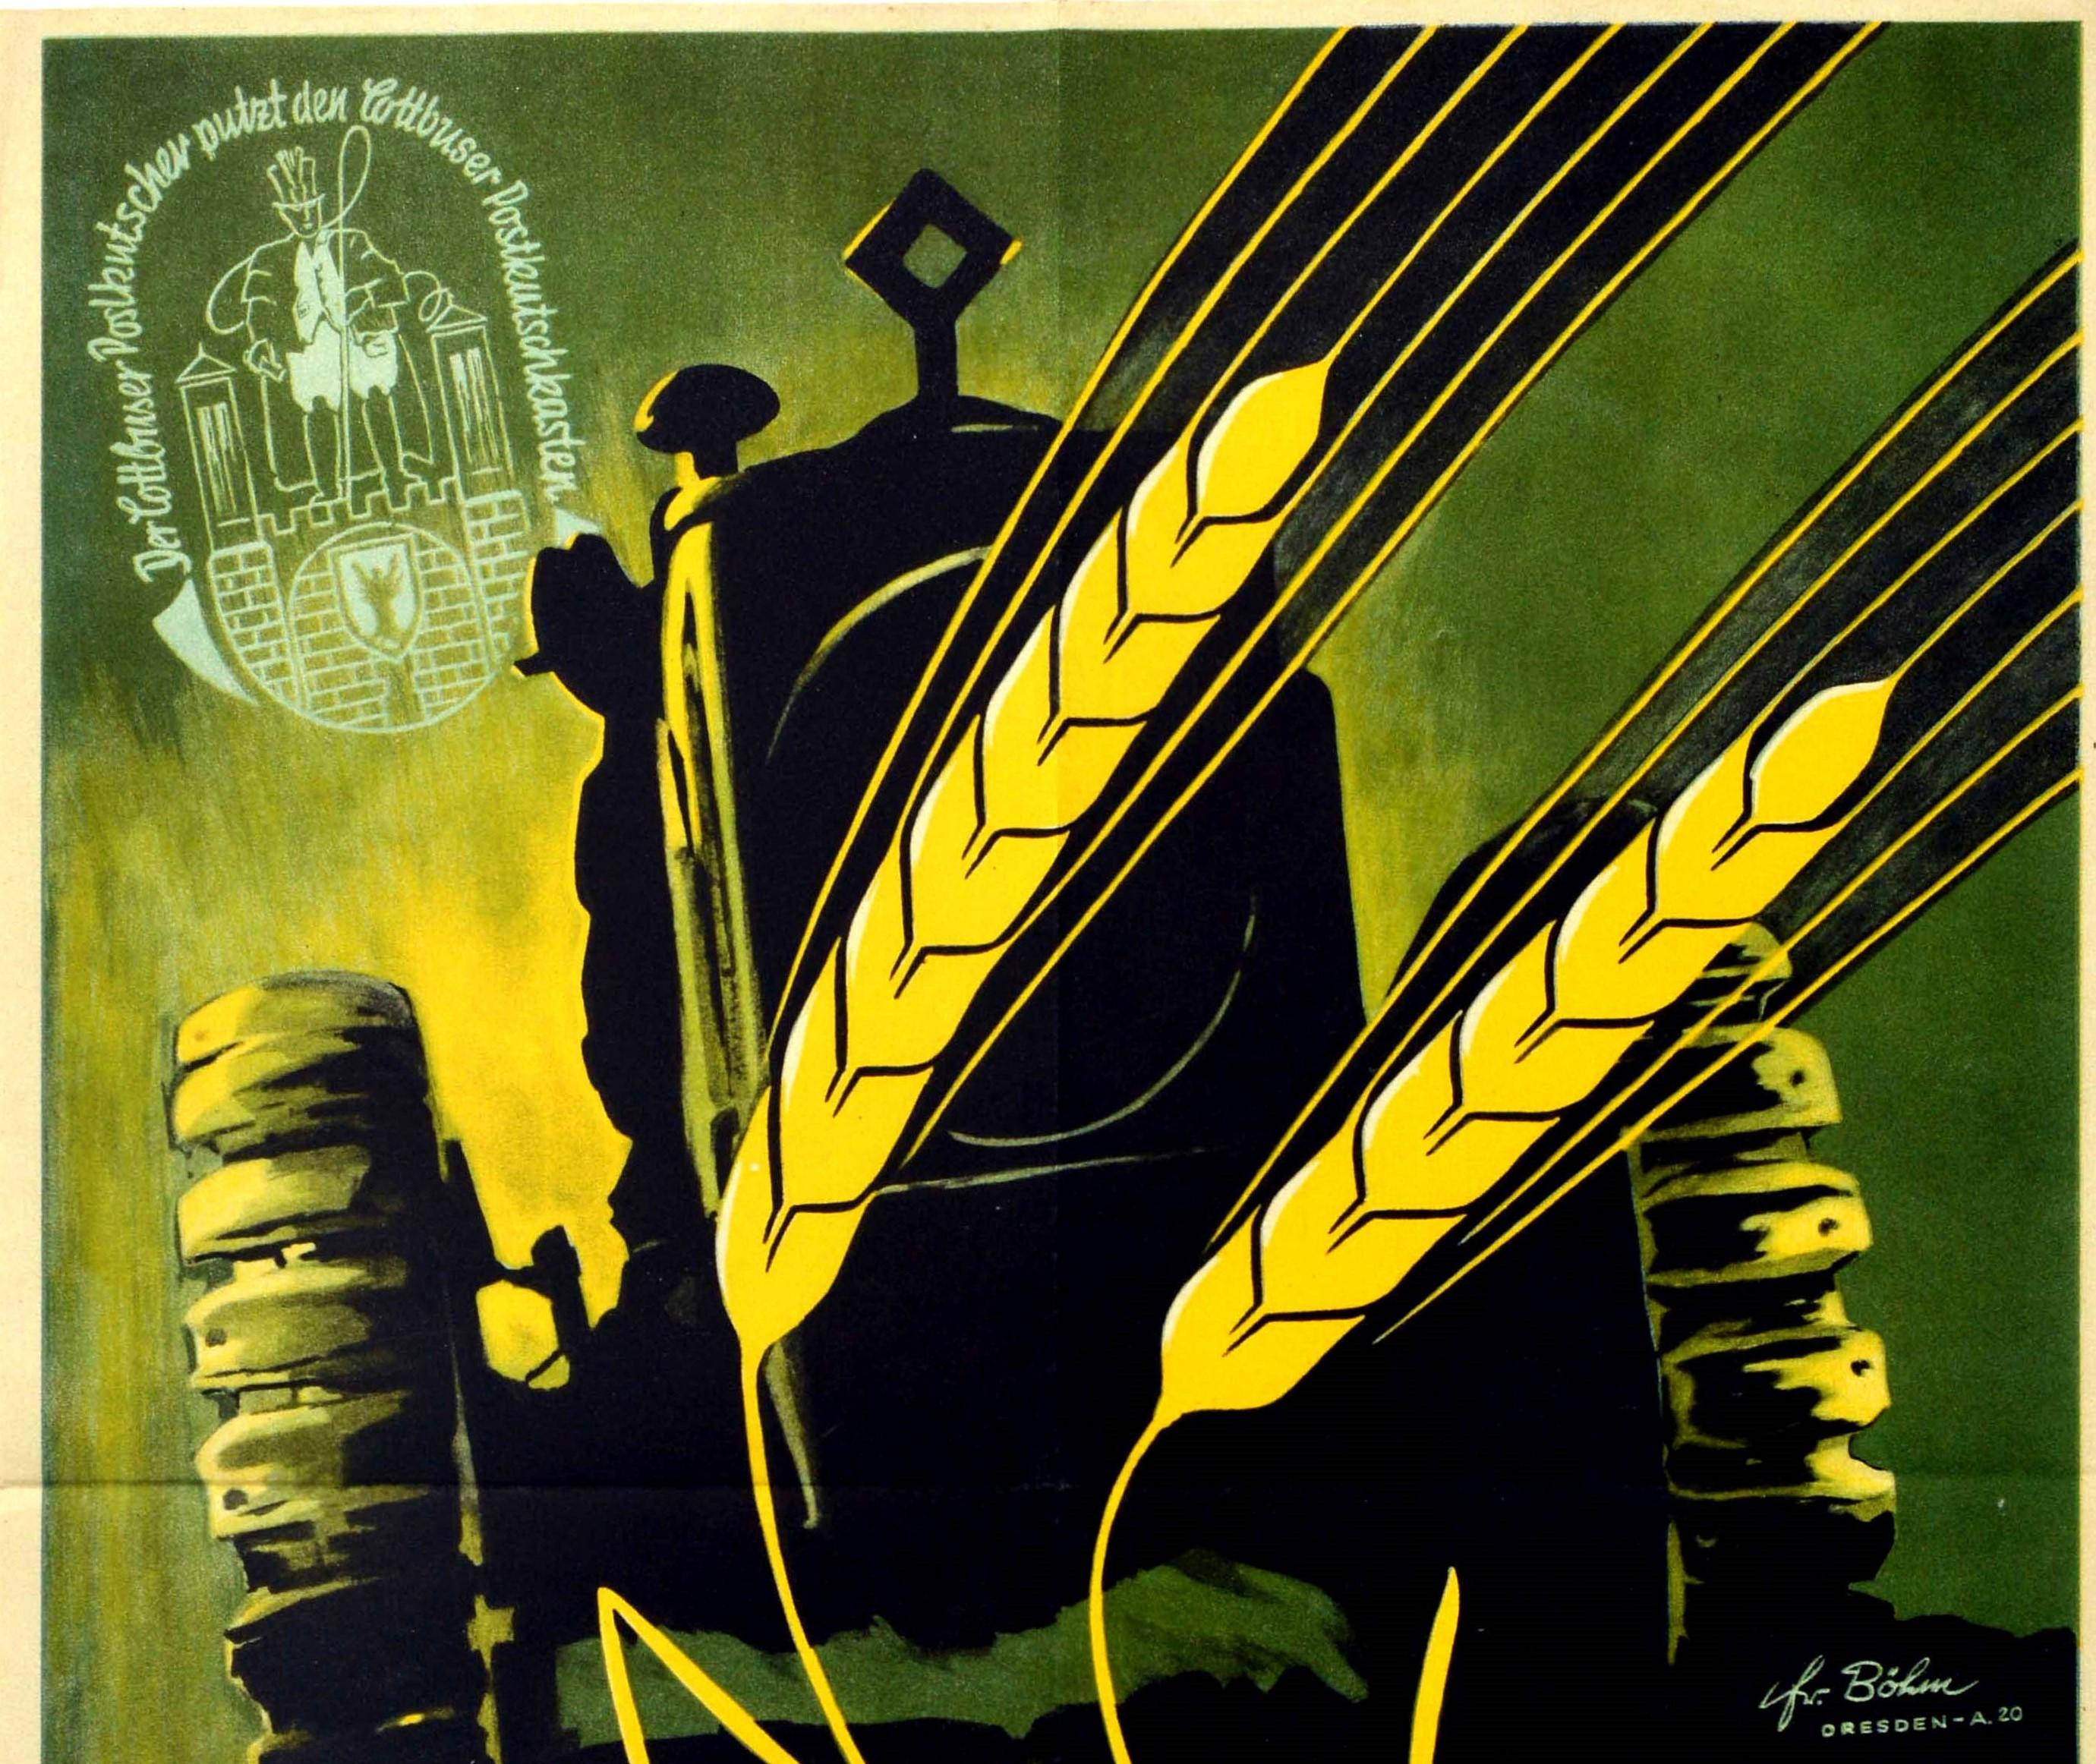 Original Vintage Poster Cottbuser Landwirtschafts Woche Agriculture Farm Tractor - Print by Bohm